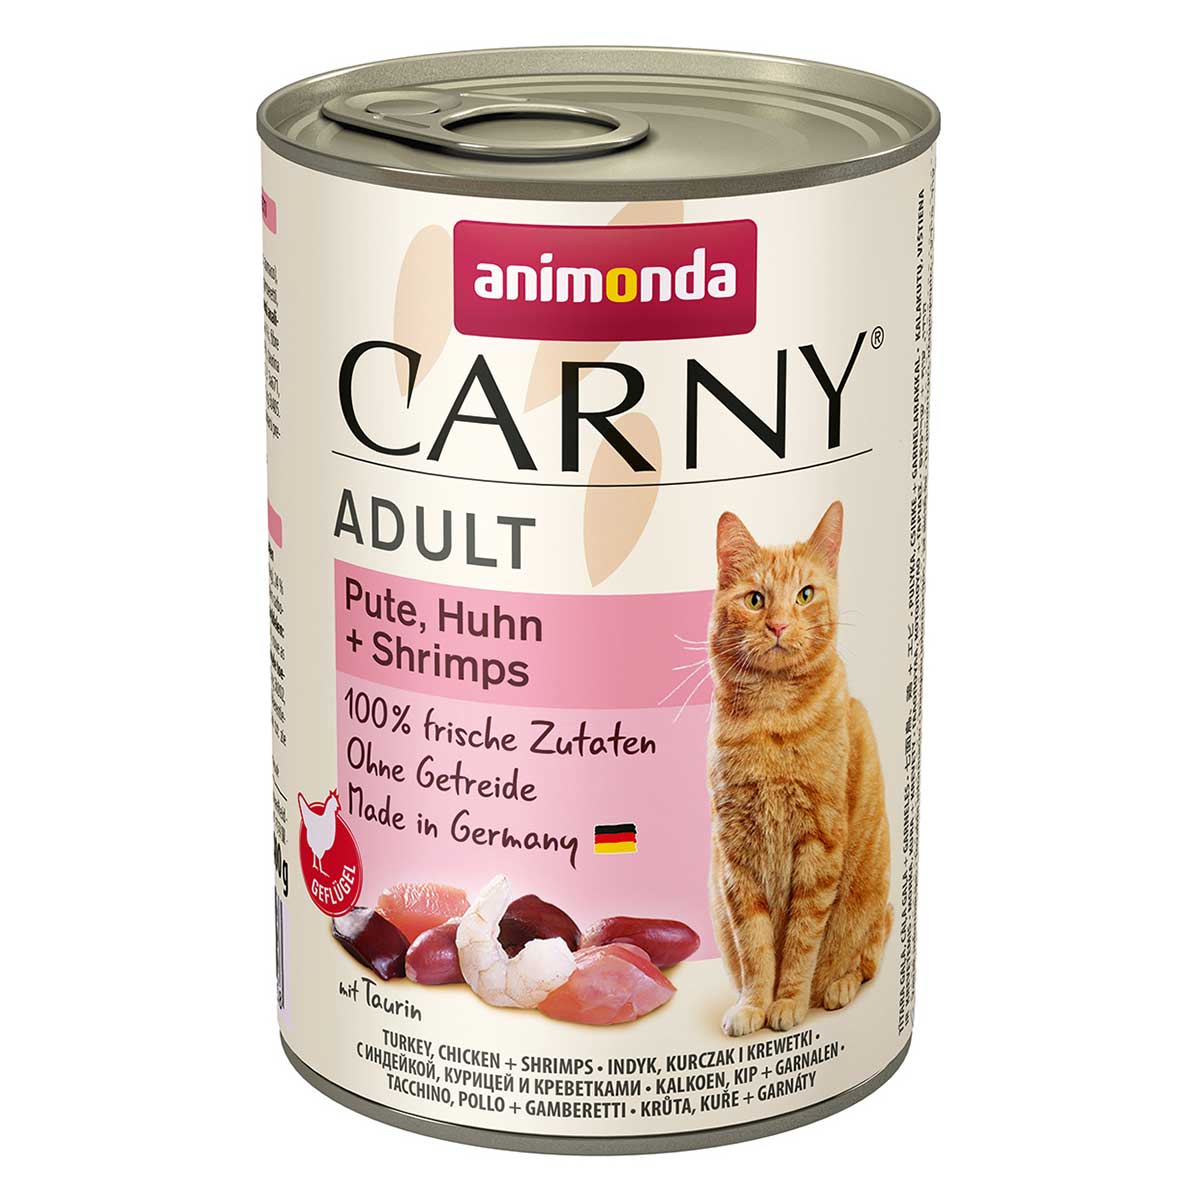 animonda Carny Adt Pute, Huhn und Shrimps 6x400g von animonda Carny